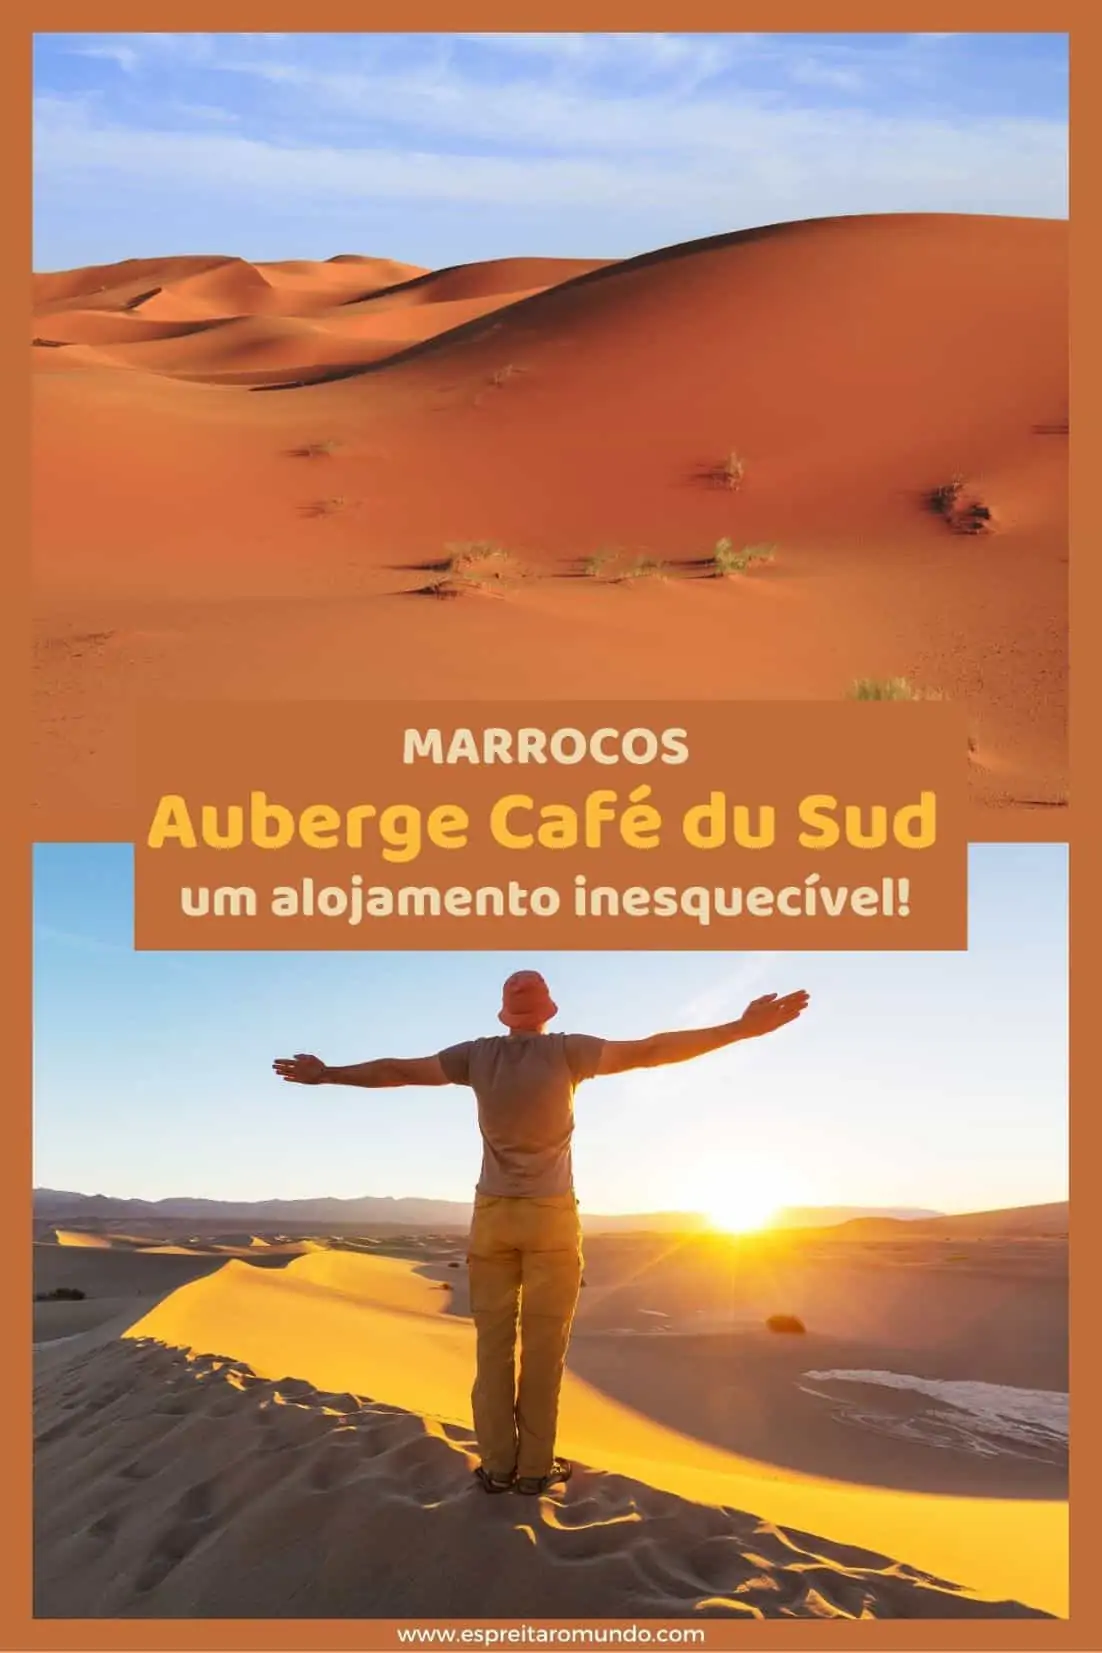 Auberge Café du Sud